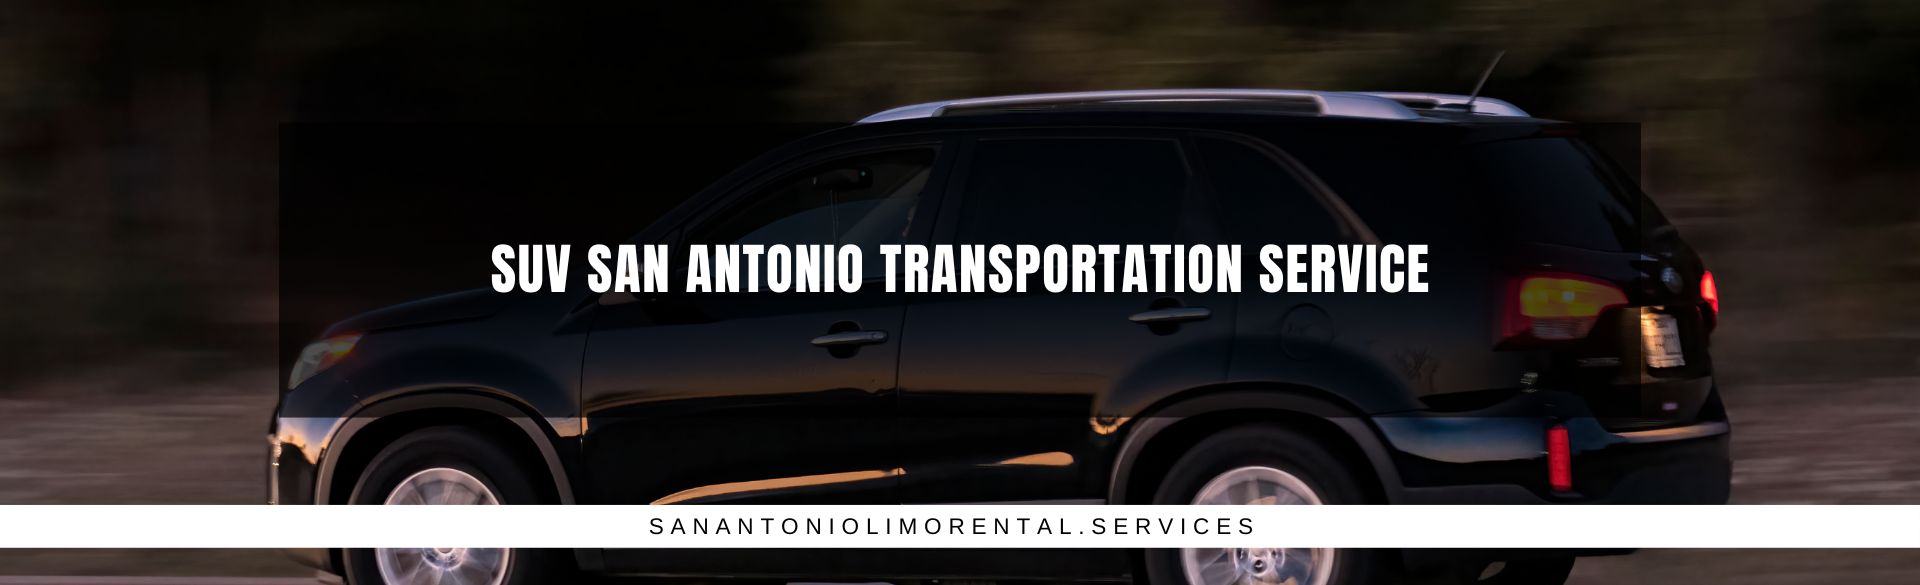 SUV San Antonio Transportation Service